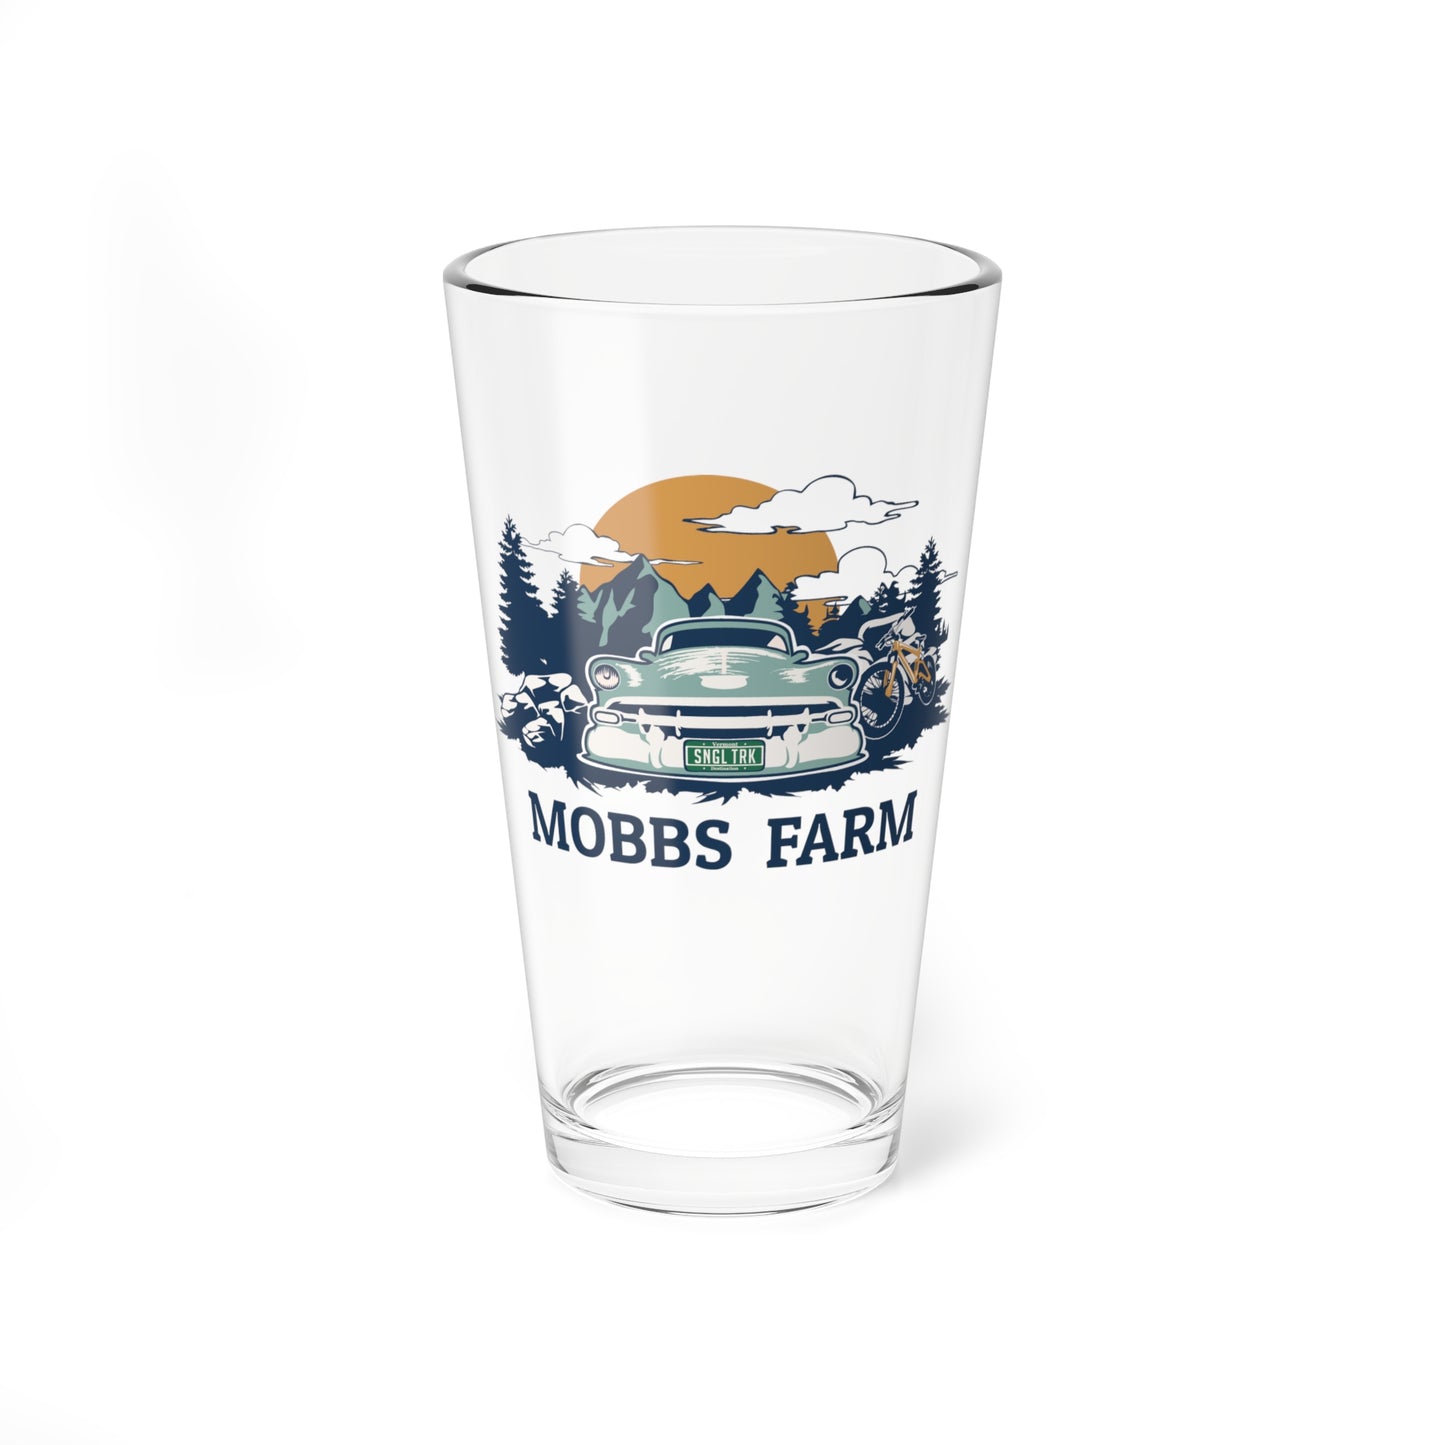 Mobbs Farm Pint Glass